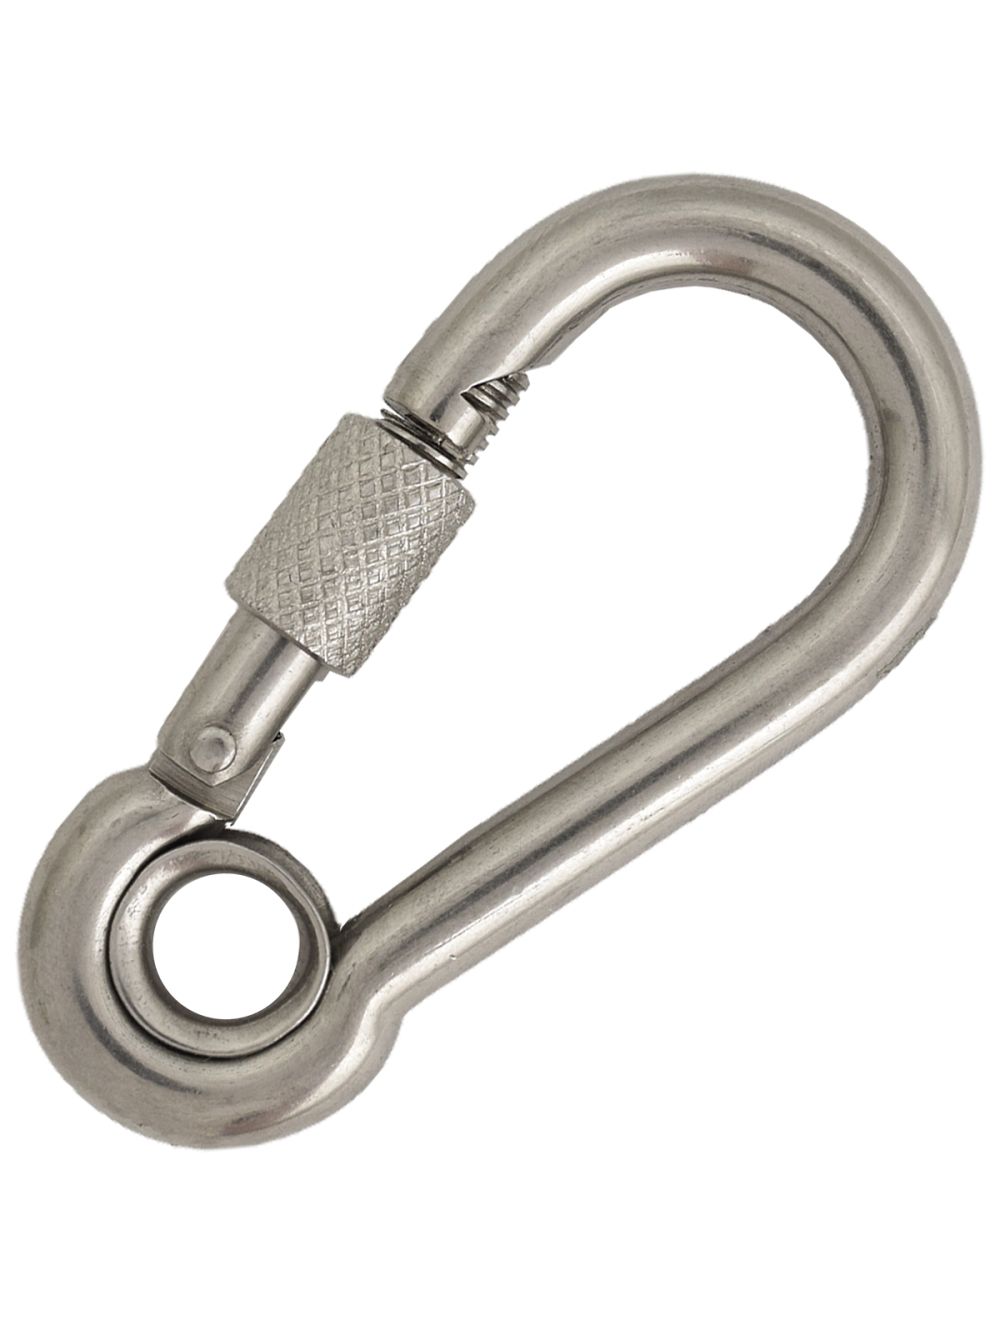 5/16 Stainless Steel Carabiner Snap Hook with Locking Screw